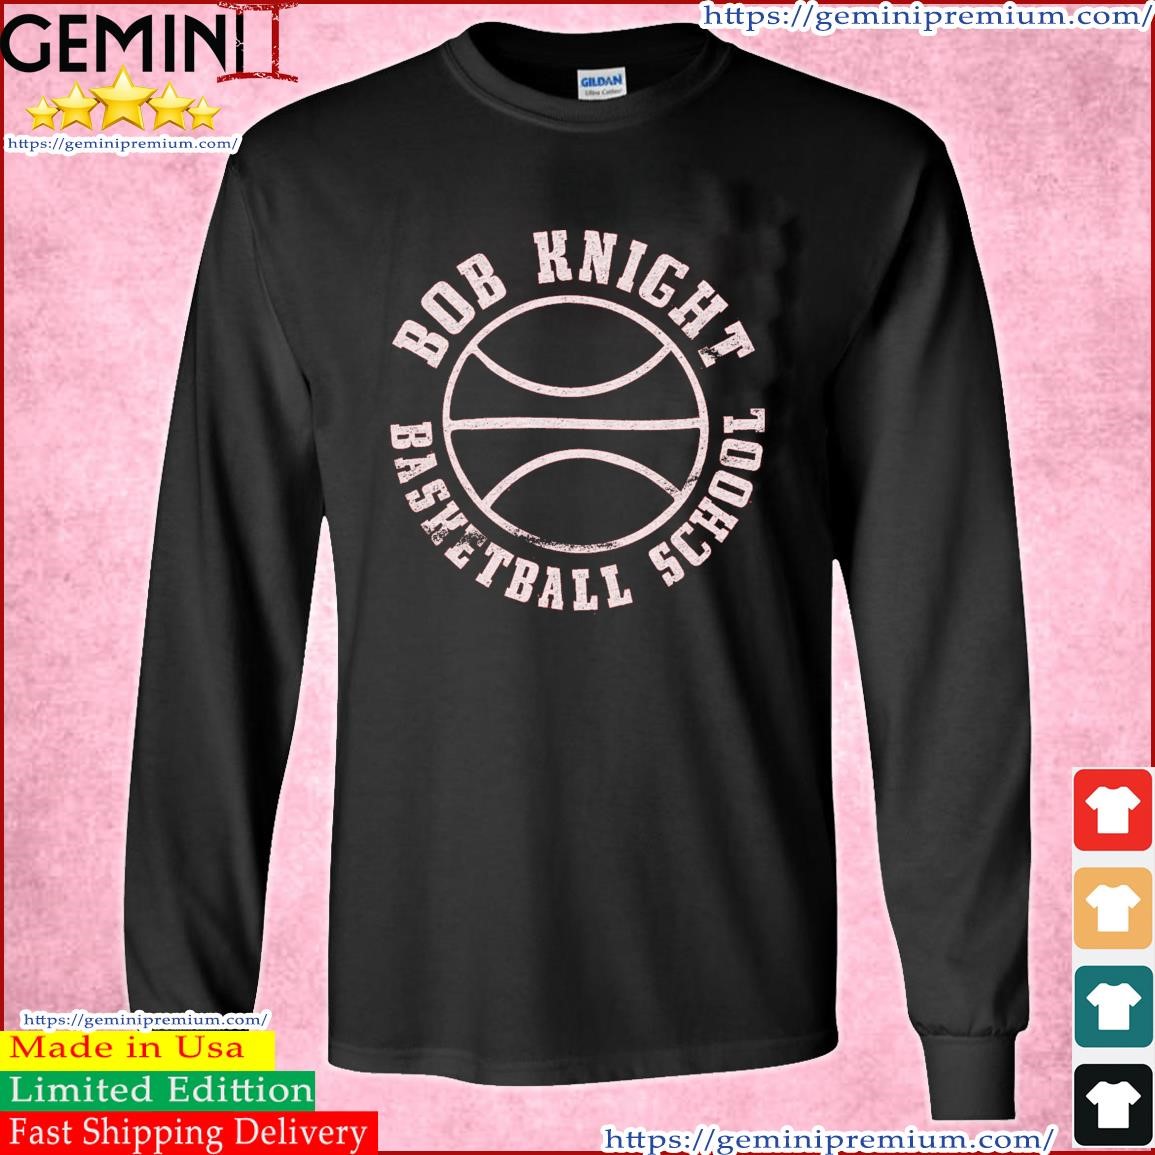 Bob Knight Basketball School Shirt Long Sleeve Tee.jpg